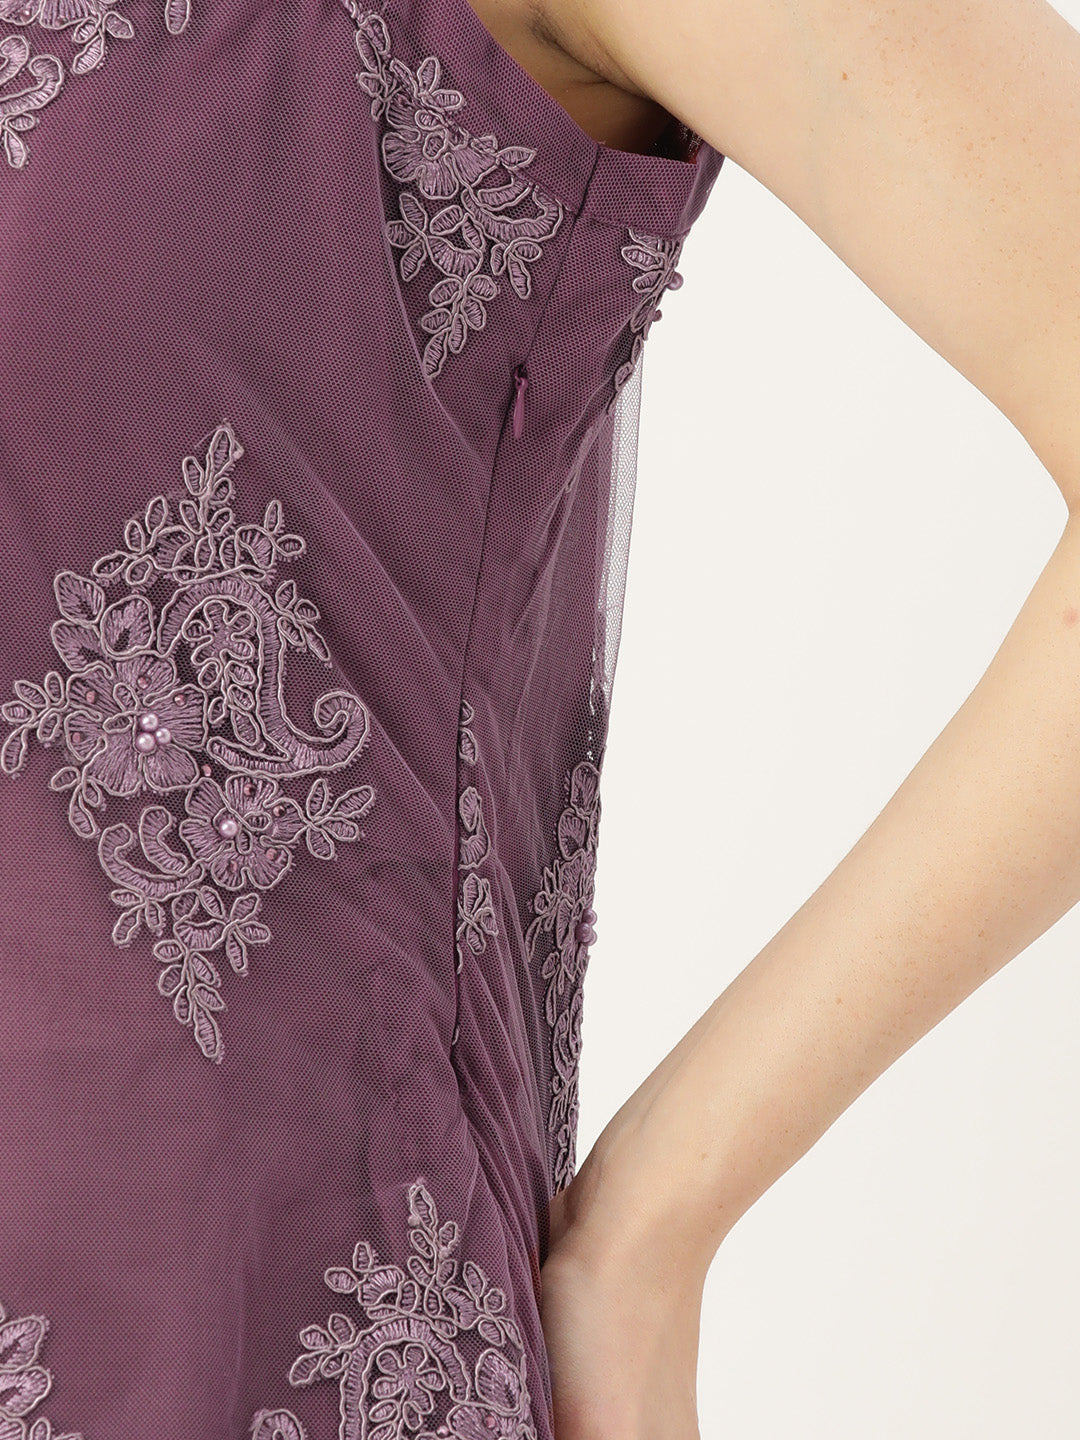 Designer Purple Net Dress